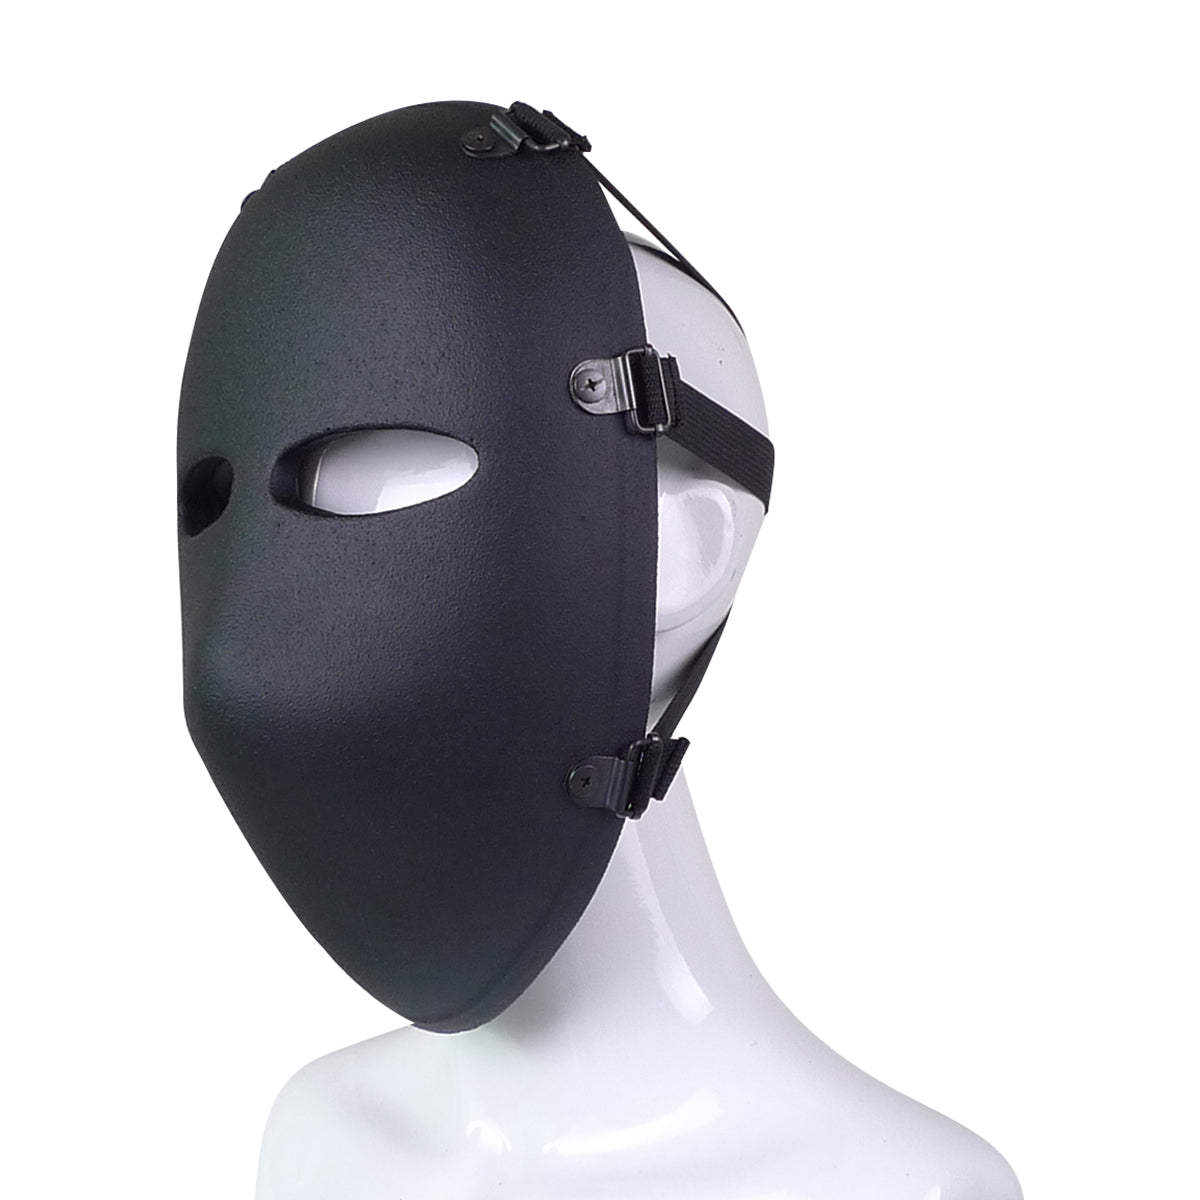 Ballistic Full Face Mask protector level 3a armor Compass Gear